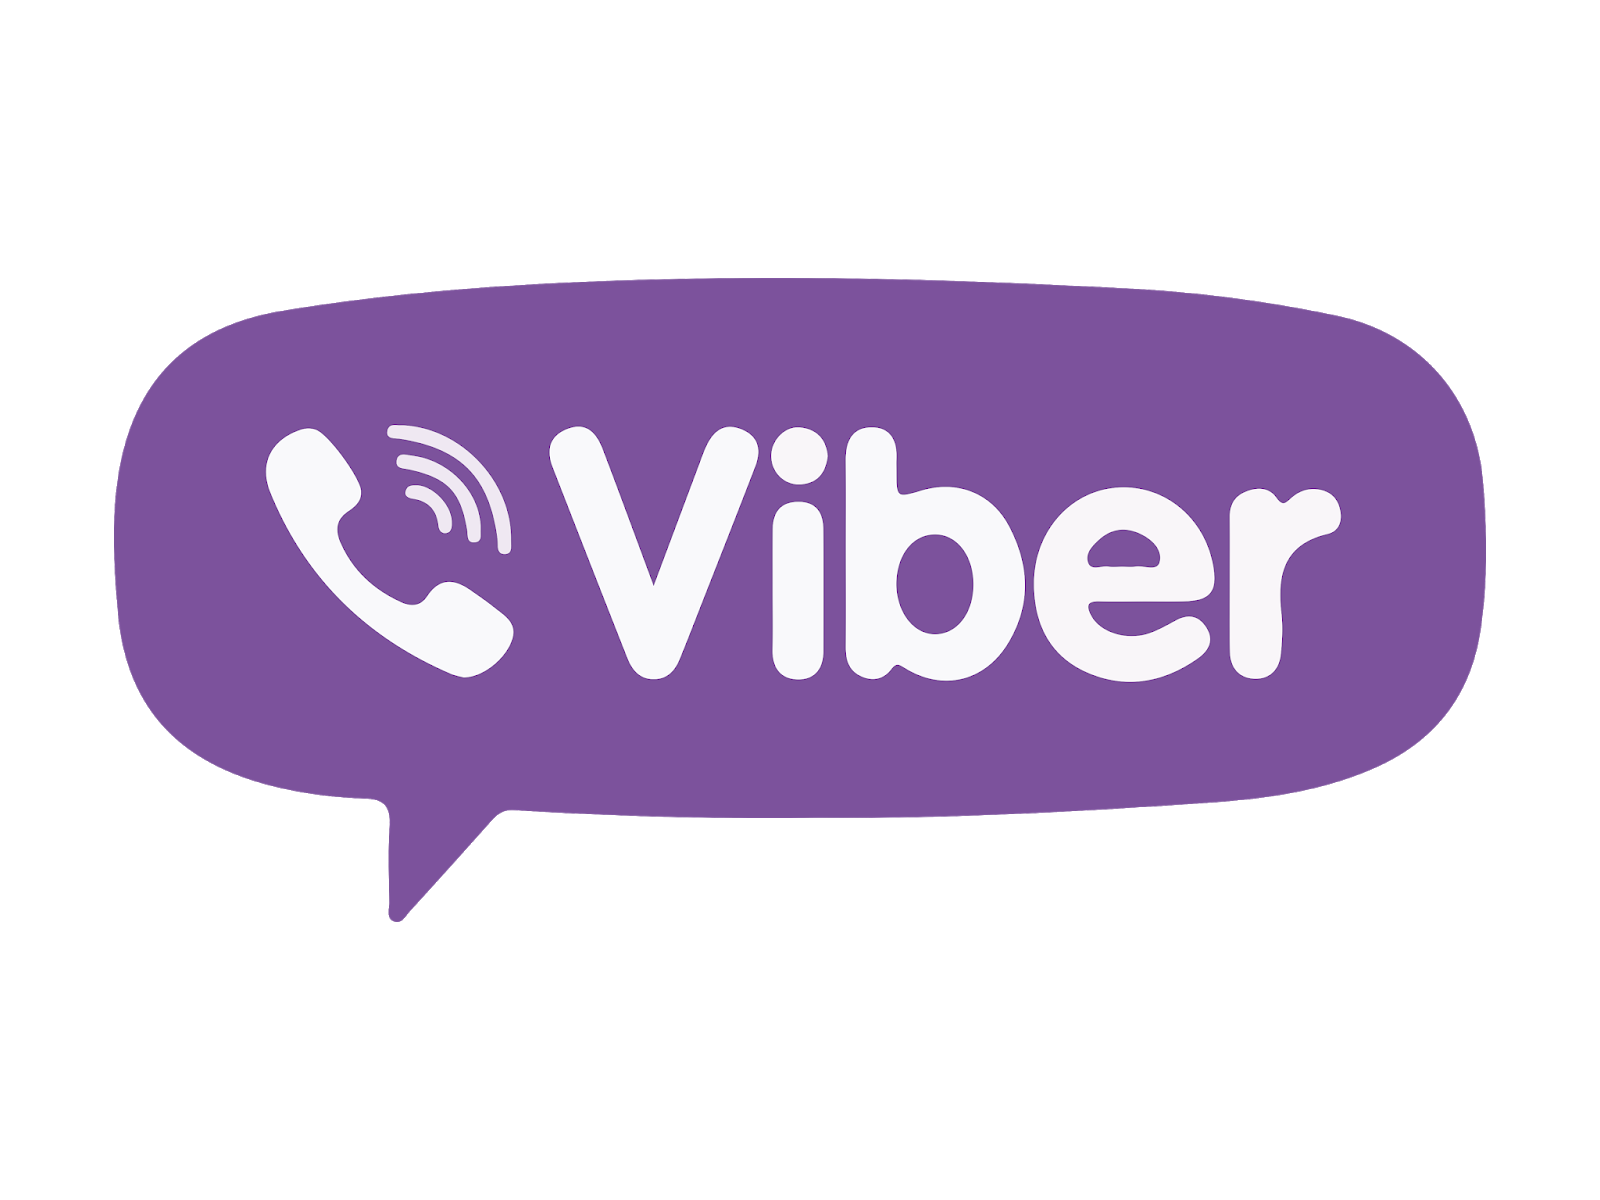 Связь viber. Viber. Viber логотип. Логотип Viber WHATSAPP. Икона вайбер.